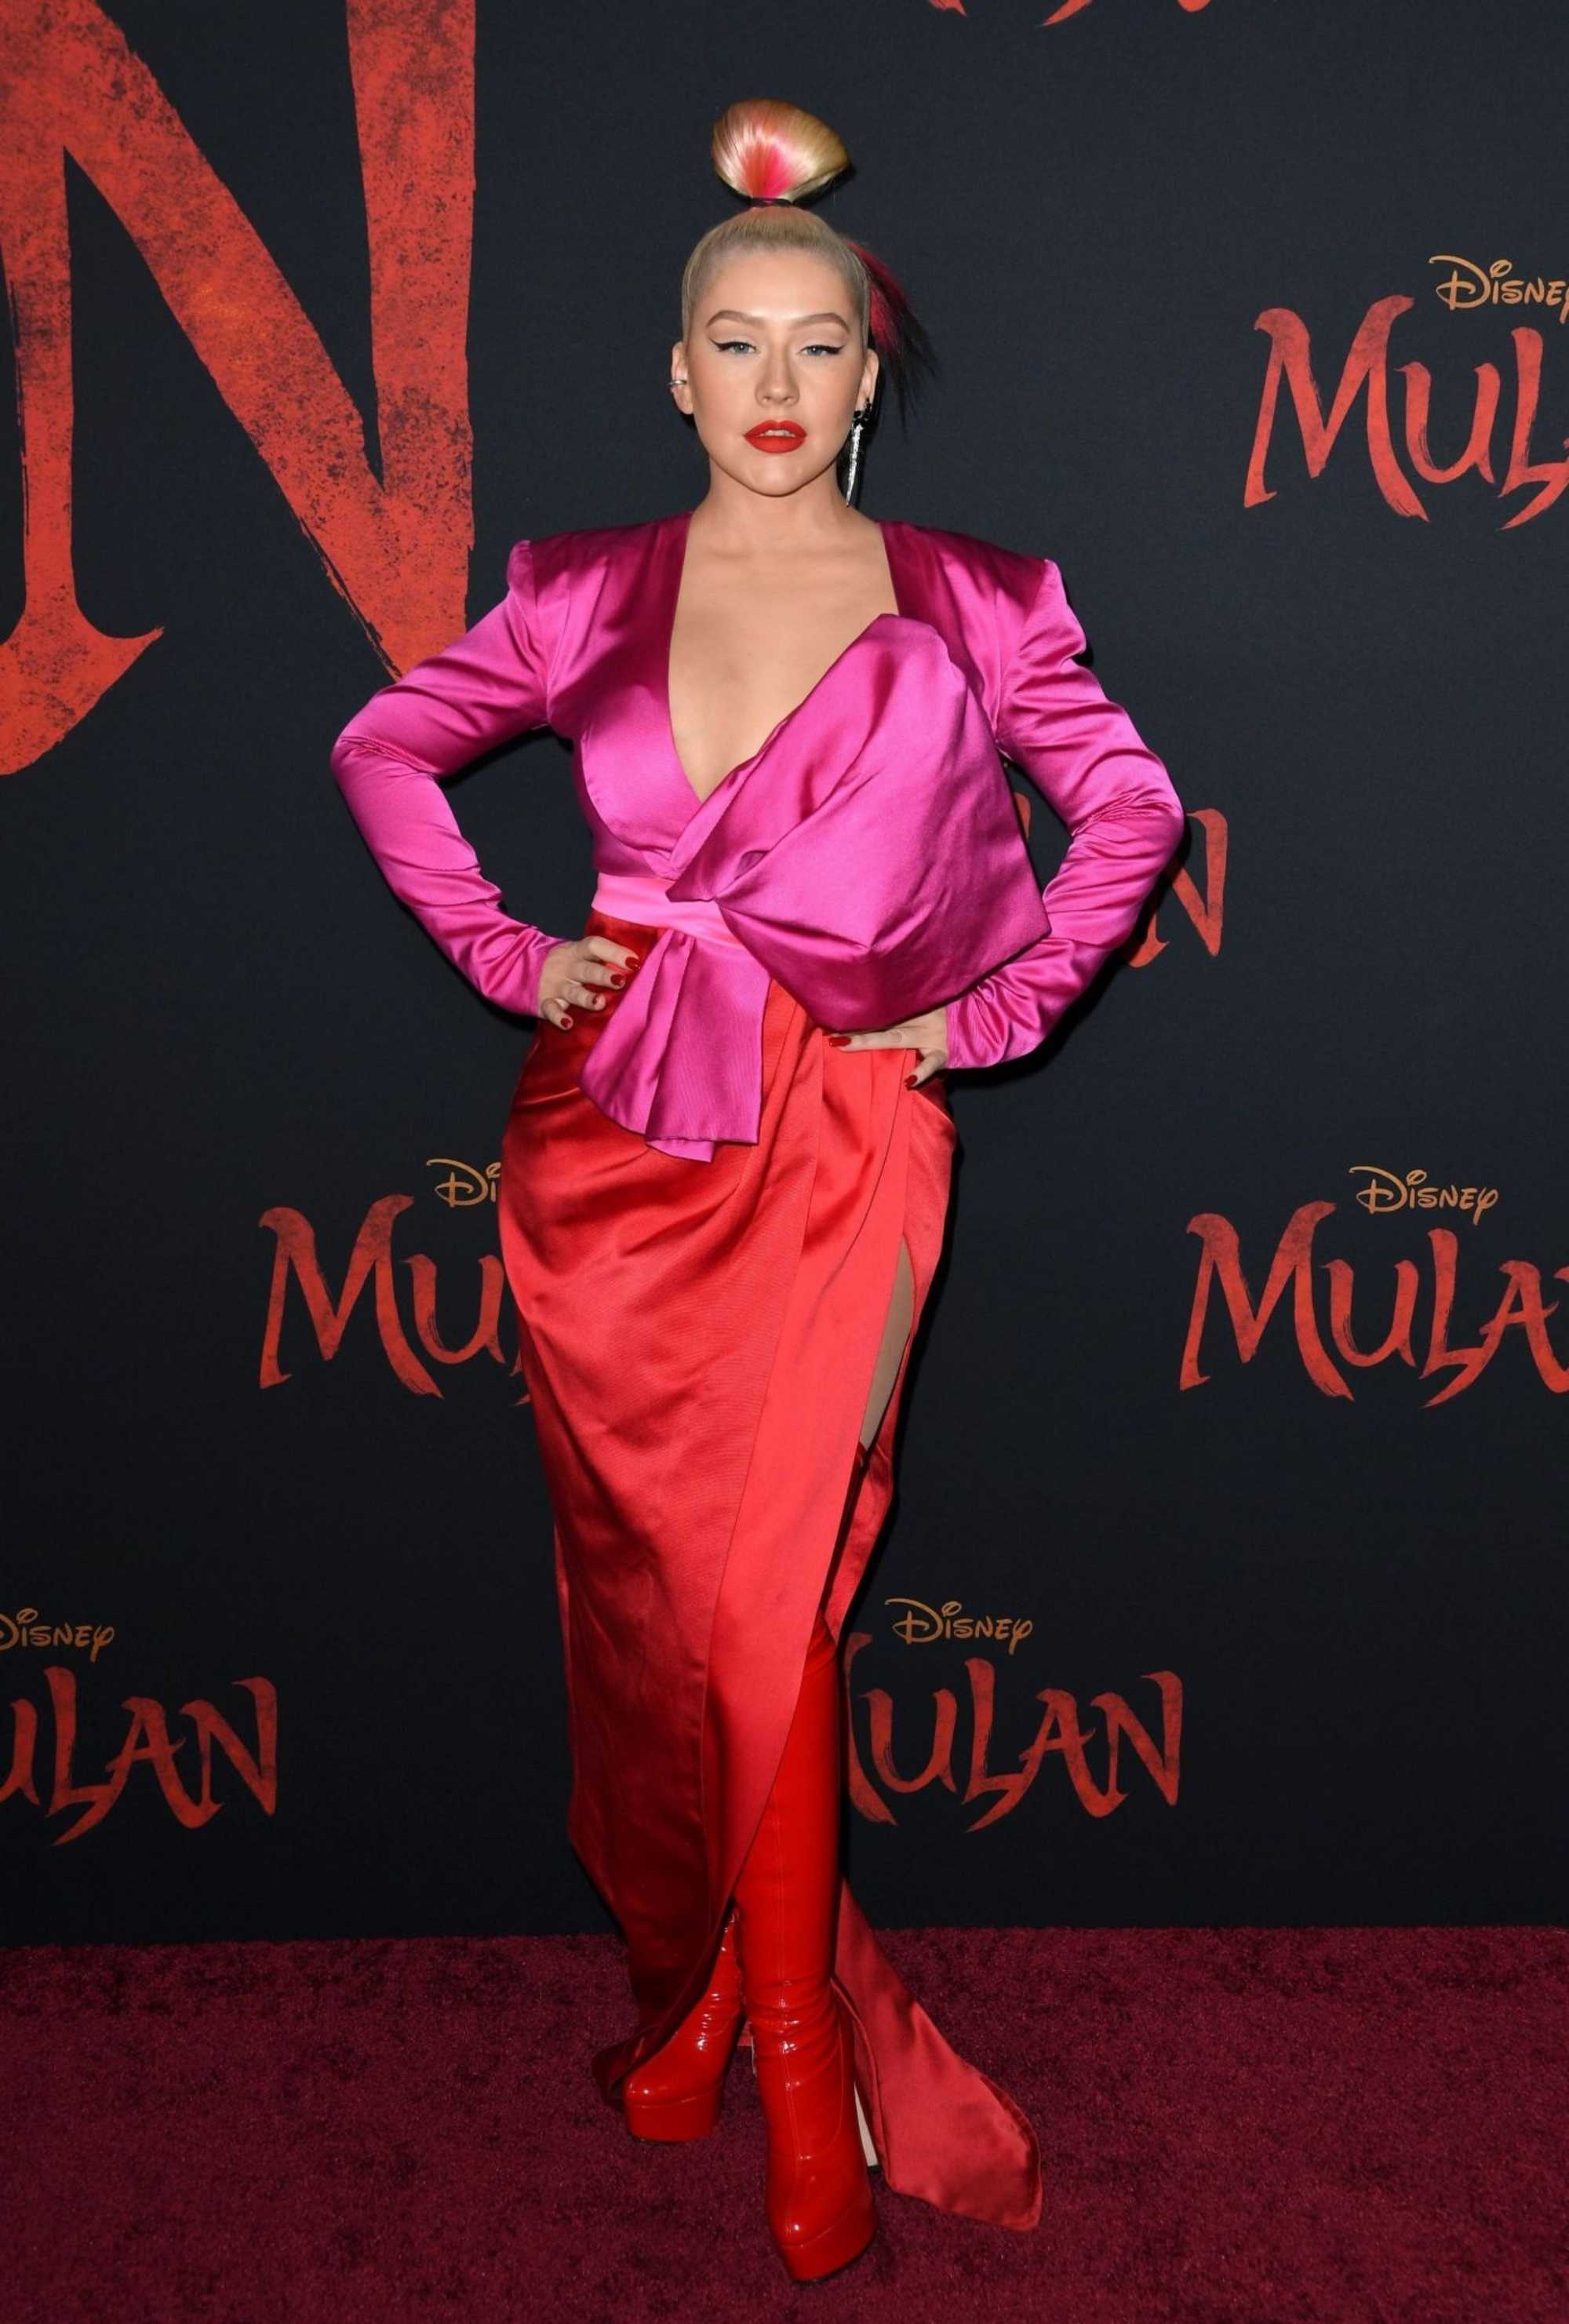 Christina Aguilera at Disney’s “Mulan” premiere on March 9